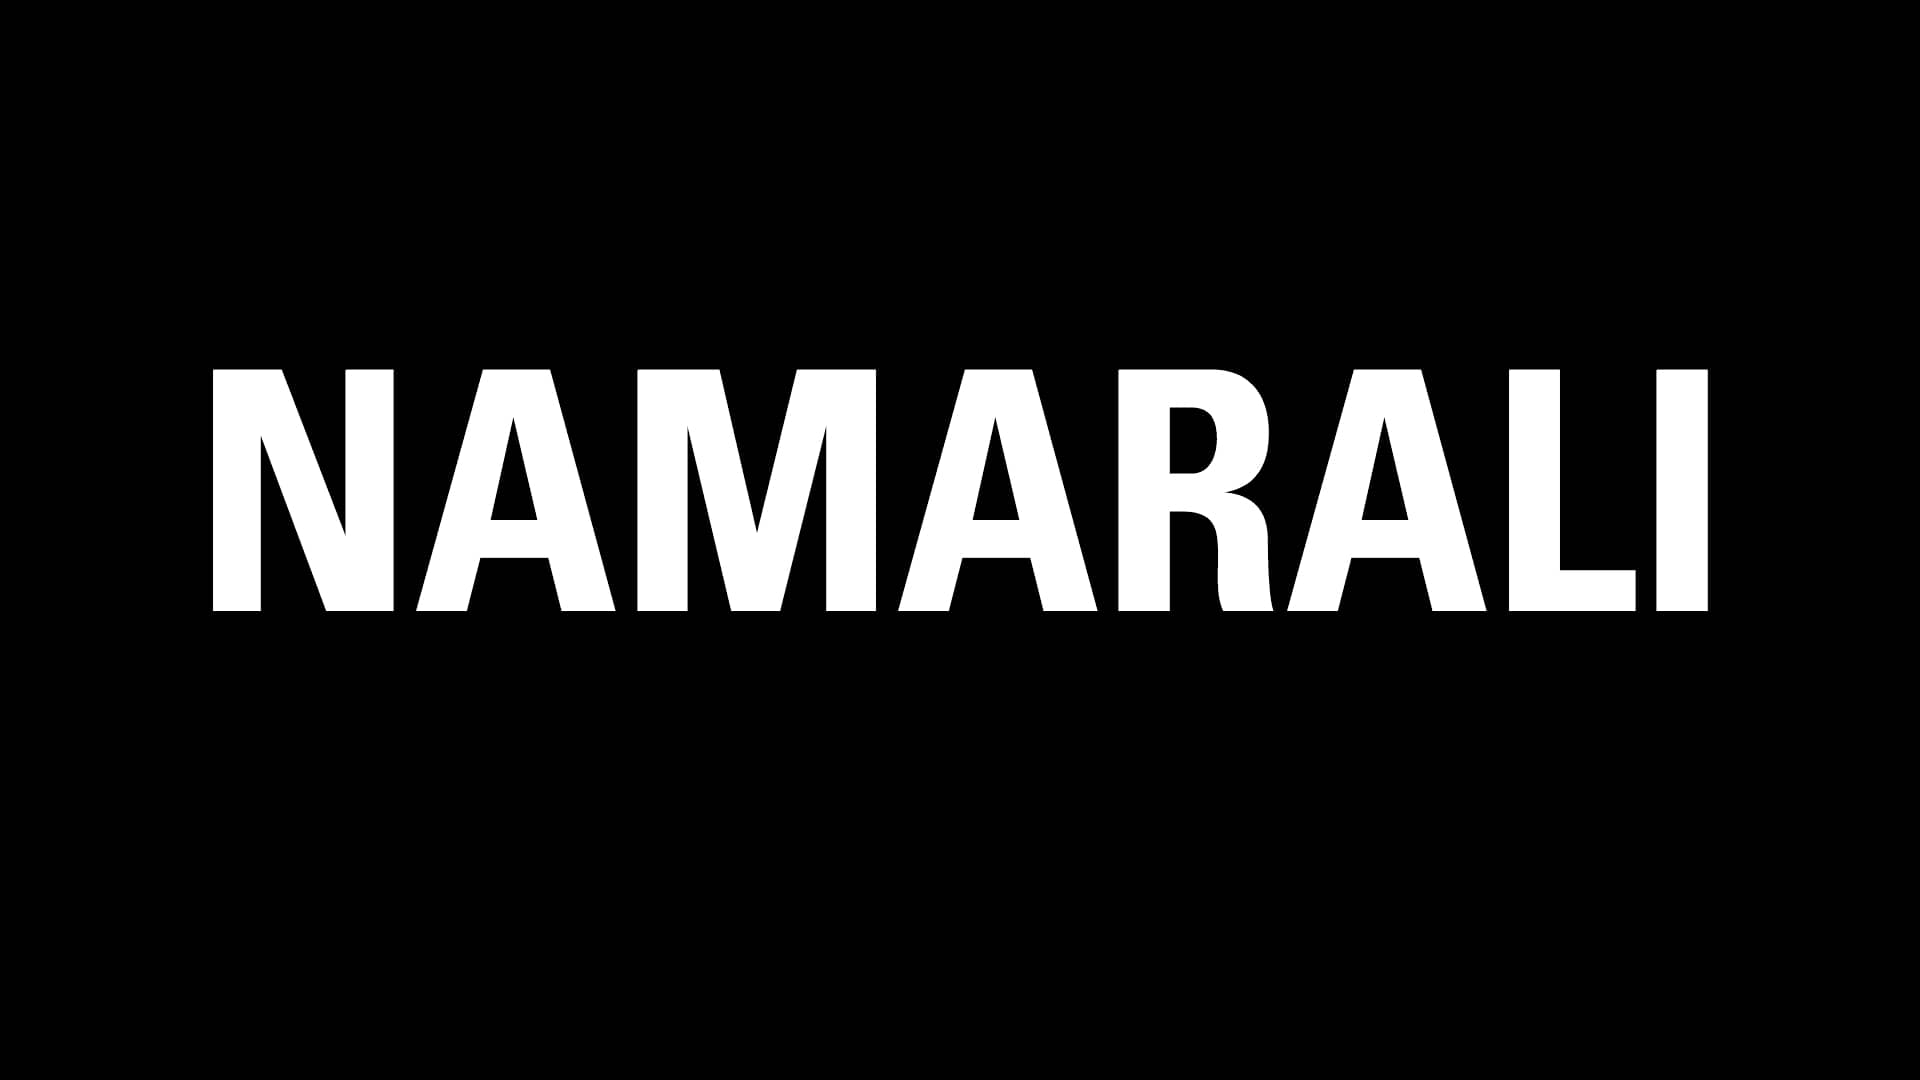 NAMARALI trailer (02.50) on Vimeo